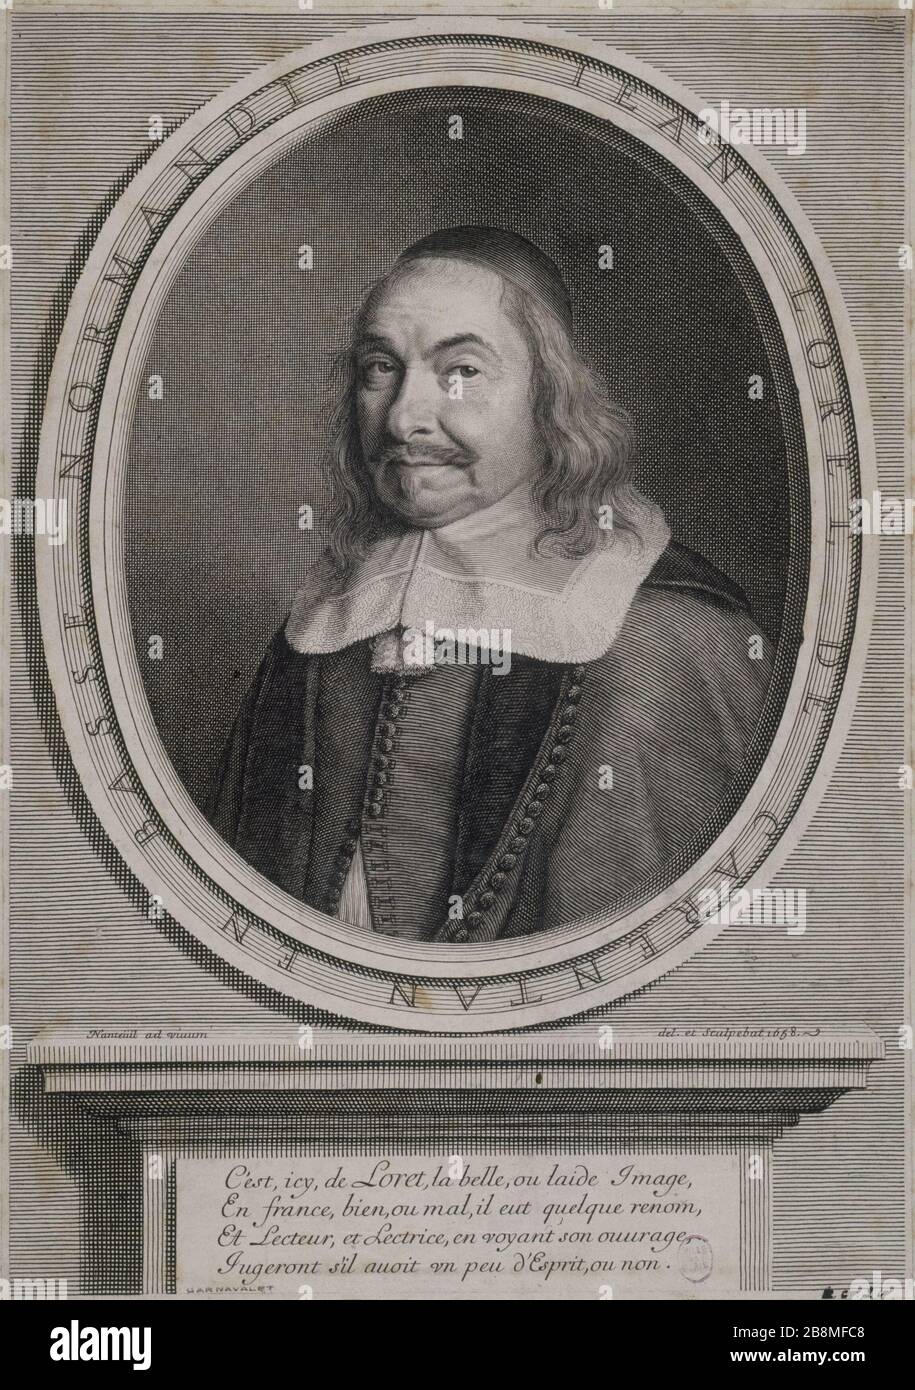 JEAN DE Loret Carentan, 1658. Robert Nanteuil (1623-1678). 'Jean Loret de Carentan, en Basse Normandie', 1658. Gravure. Paris, musée Carnavalet. Stock Photo